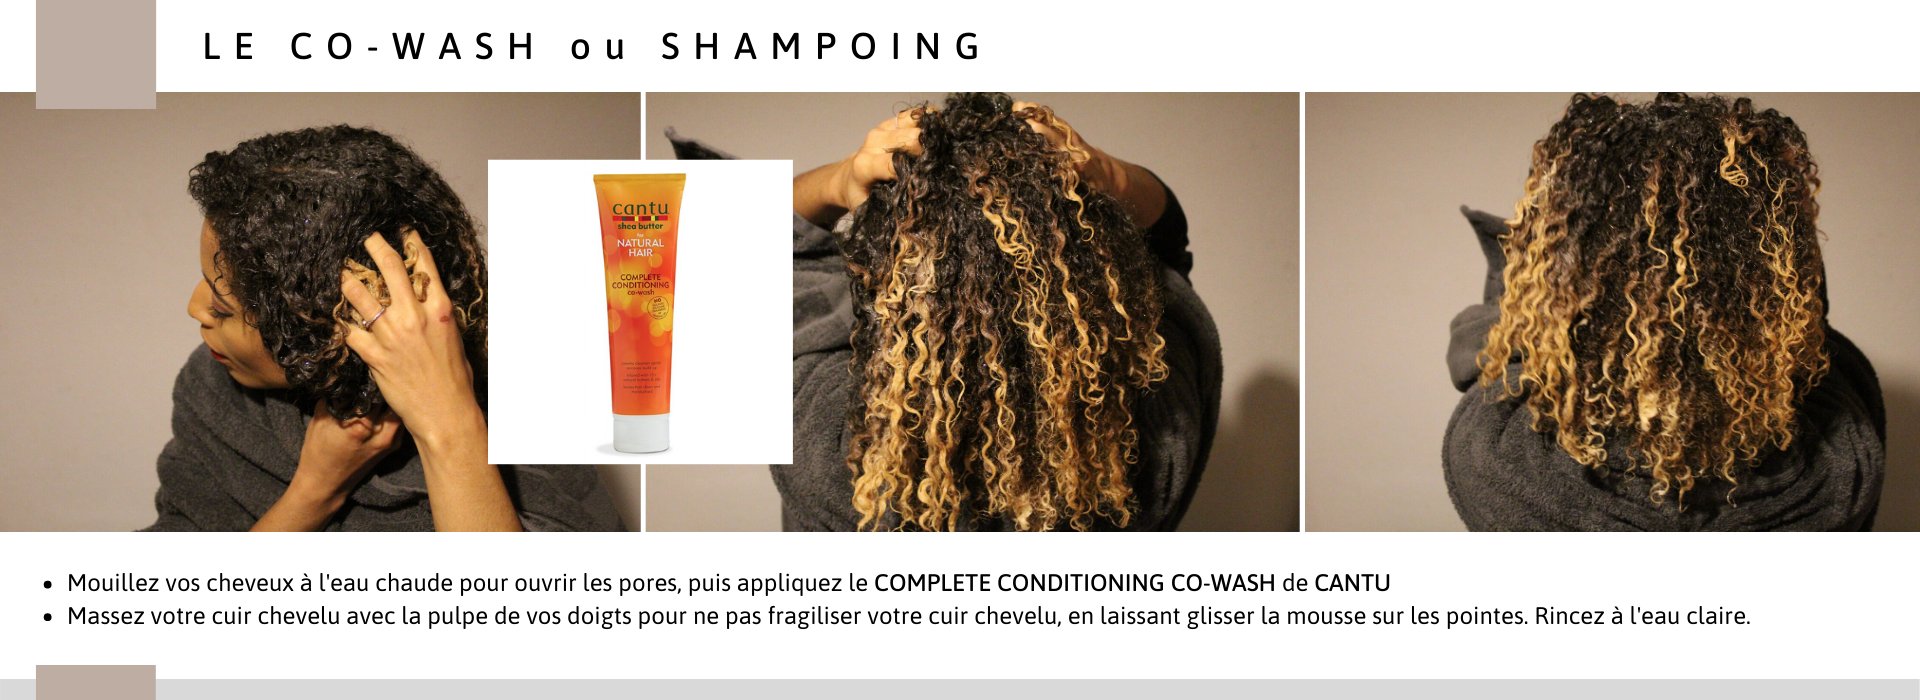 fiche produit ebcosmetique cantu shea butter natural hair complete conditioning co-wash routine capillaire afro bouclé